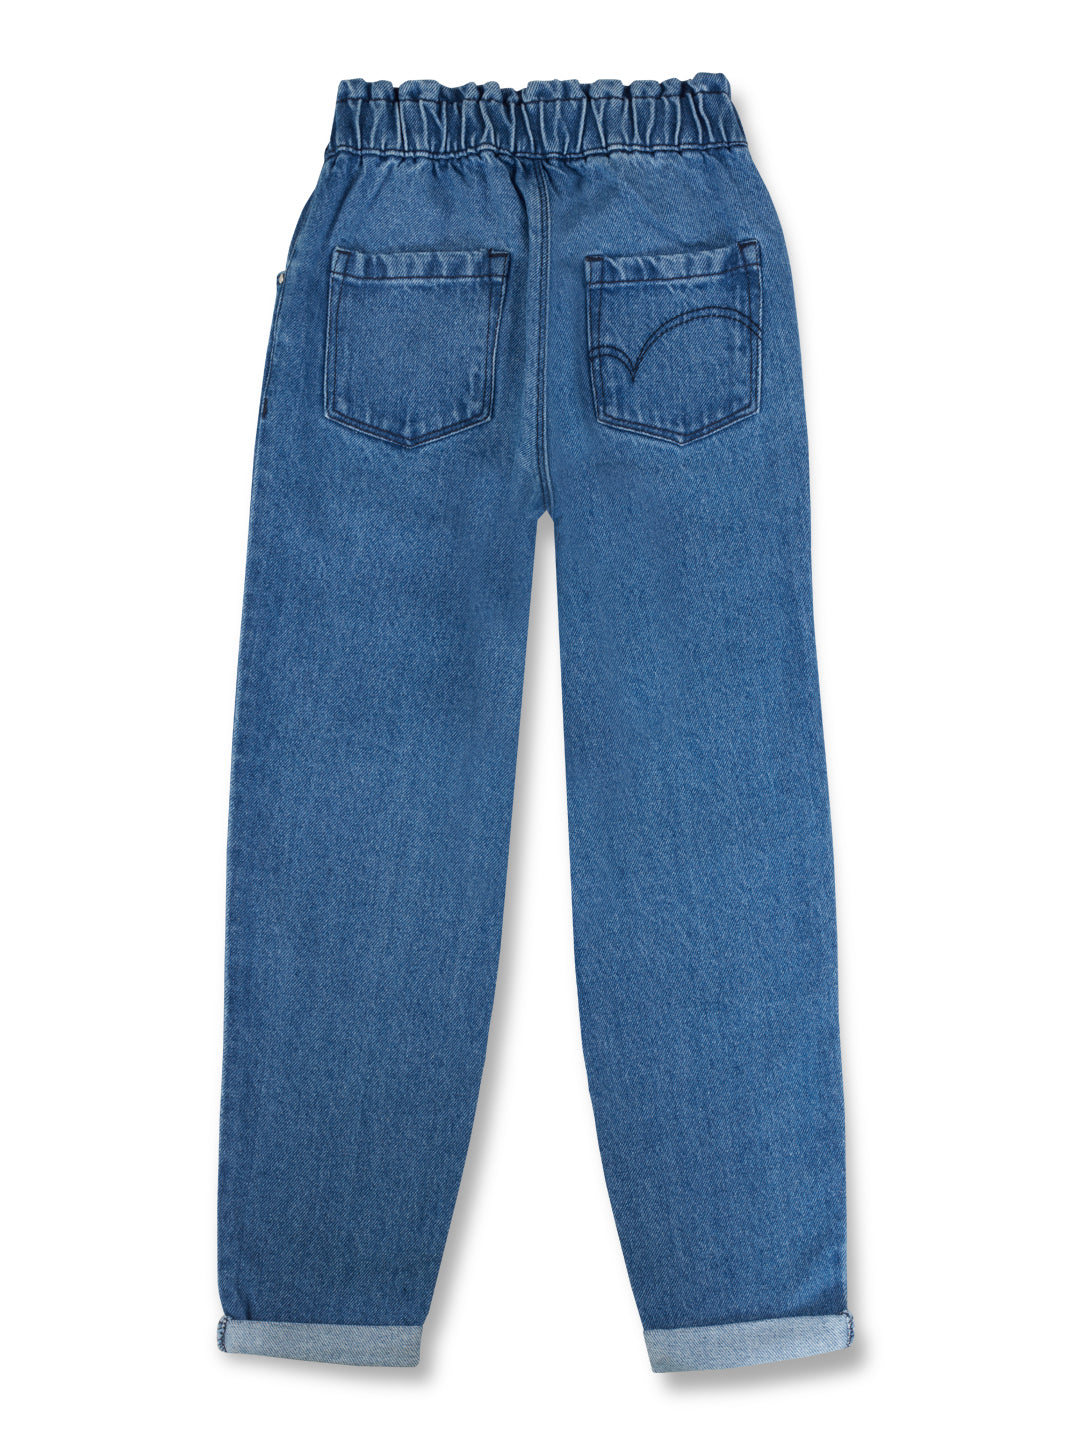 Boys woven blue jeans pants